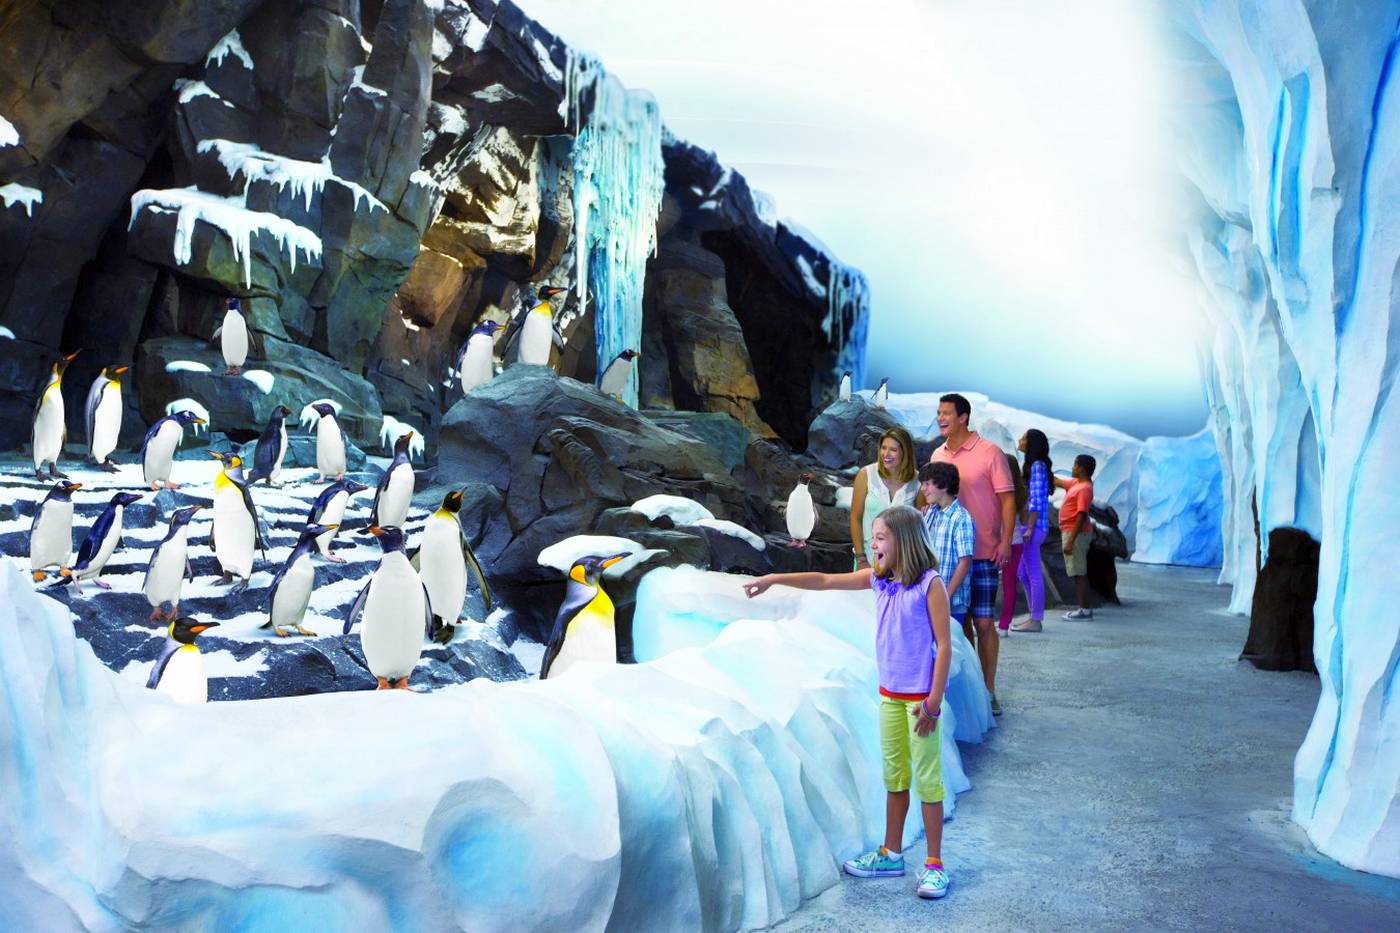 SeaWorld theme park in Orlando